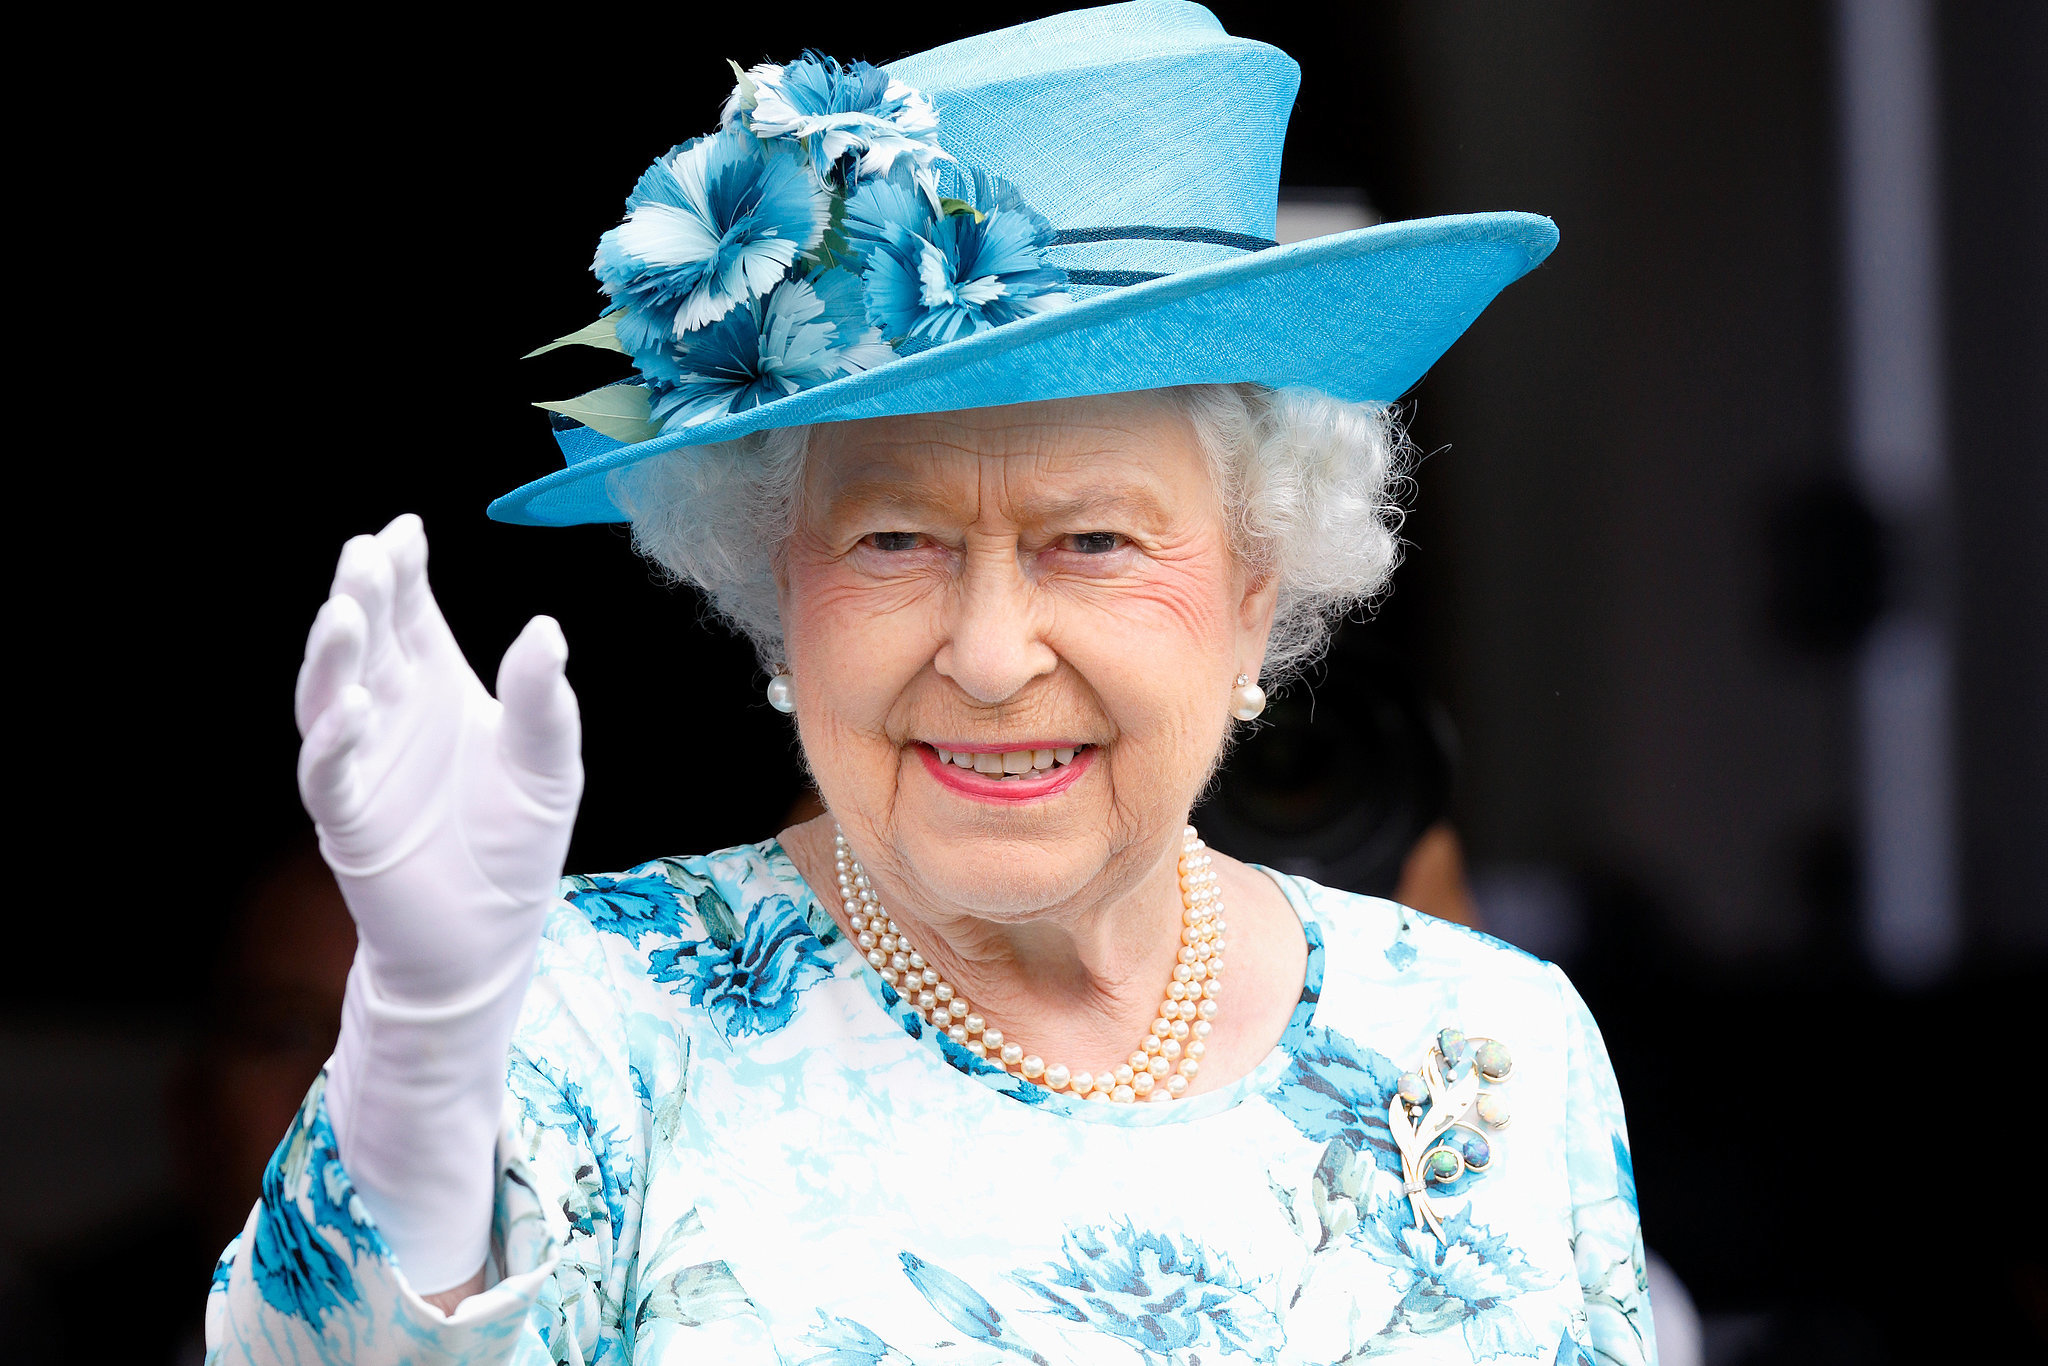 Queen Elizabeth II Backgrounds, Compatible - PC, Mobile, Gadgets| 2048x1366 px